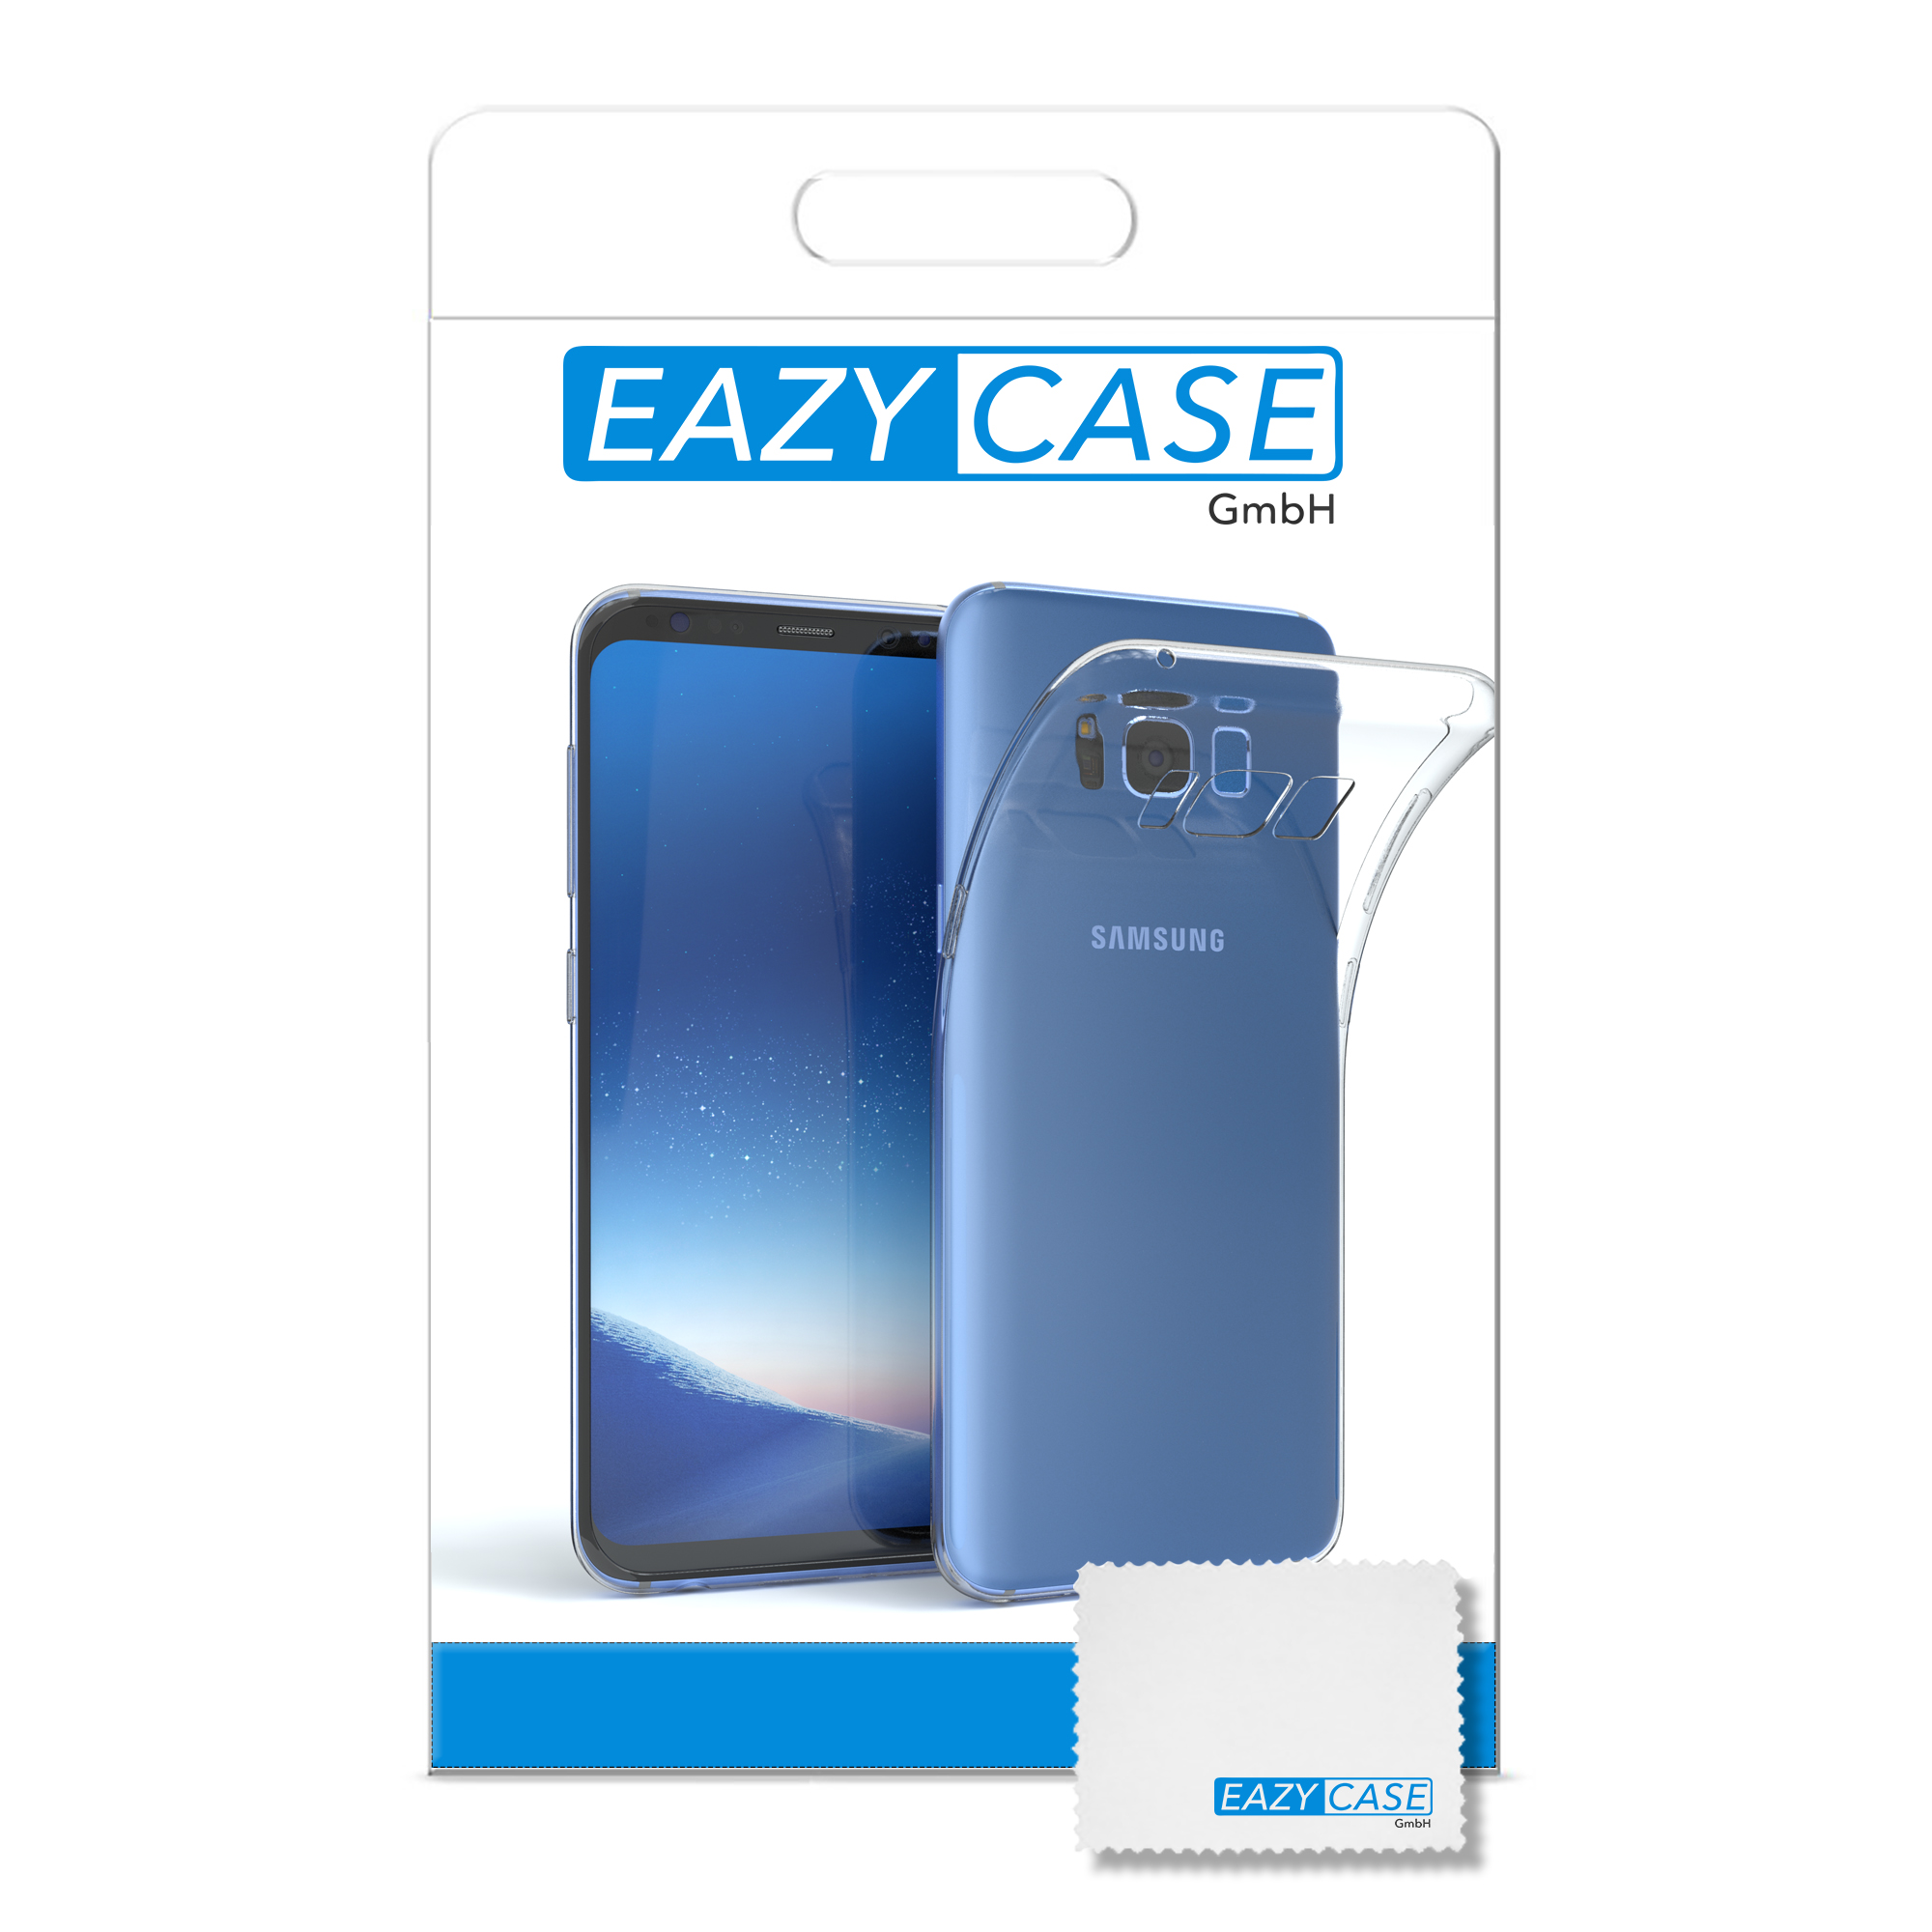 EAZY CASE Slimcover Clear, Backcover, S8, Samsung, Galaxy Durchsichtig